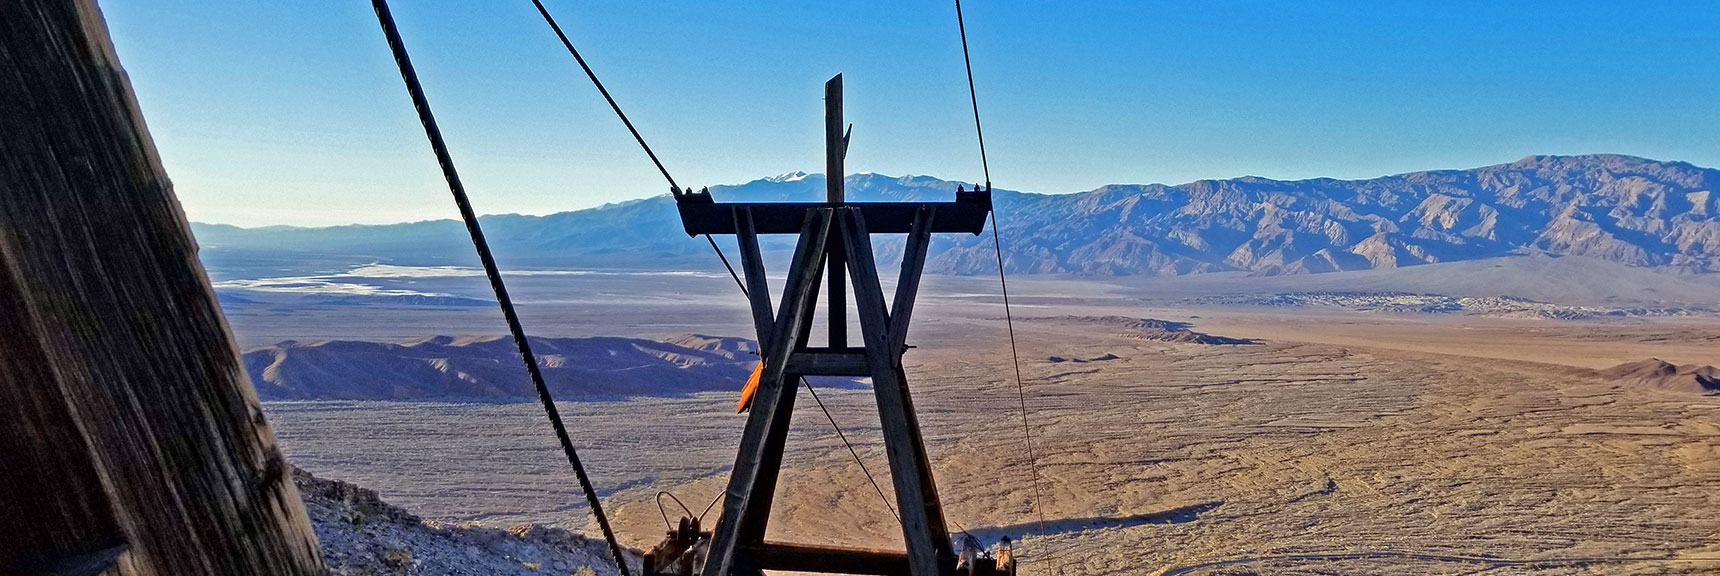 Aerial Tram's Tower with Panamint Range Background | Keane Wonder Mine | Death Valley National Park, Californi